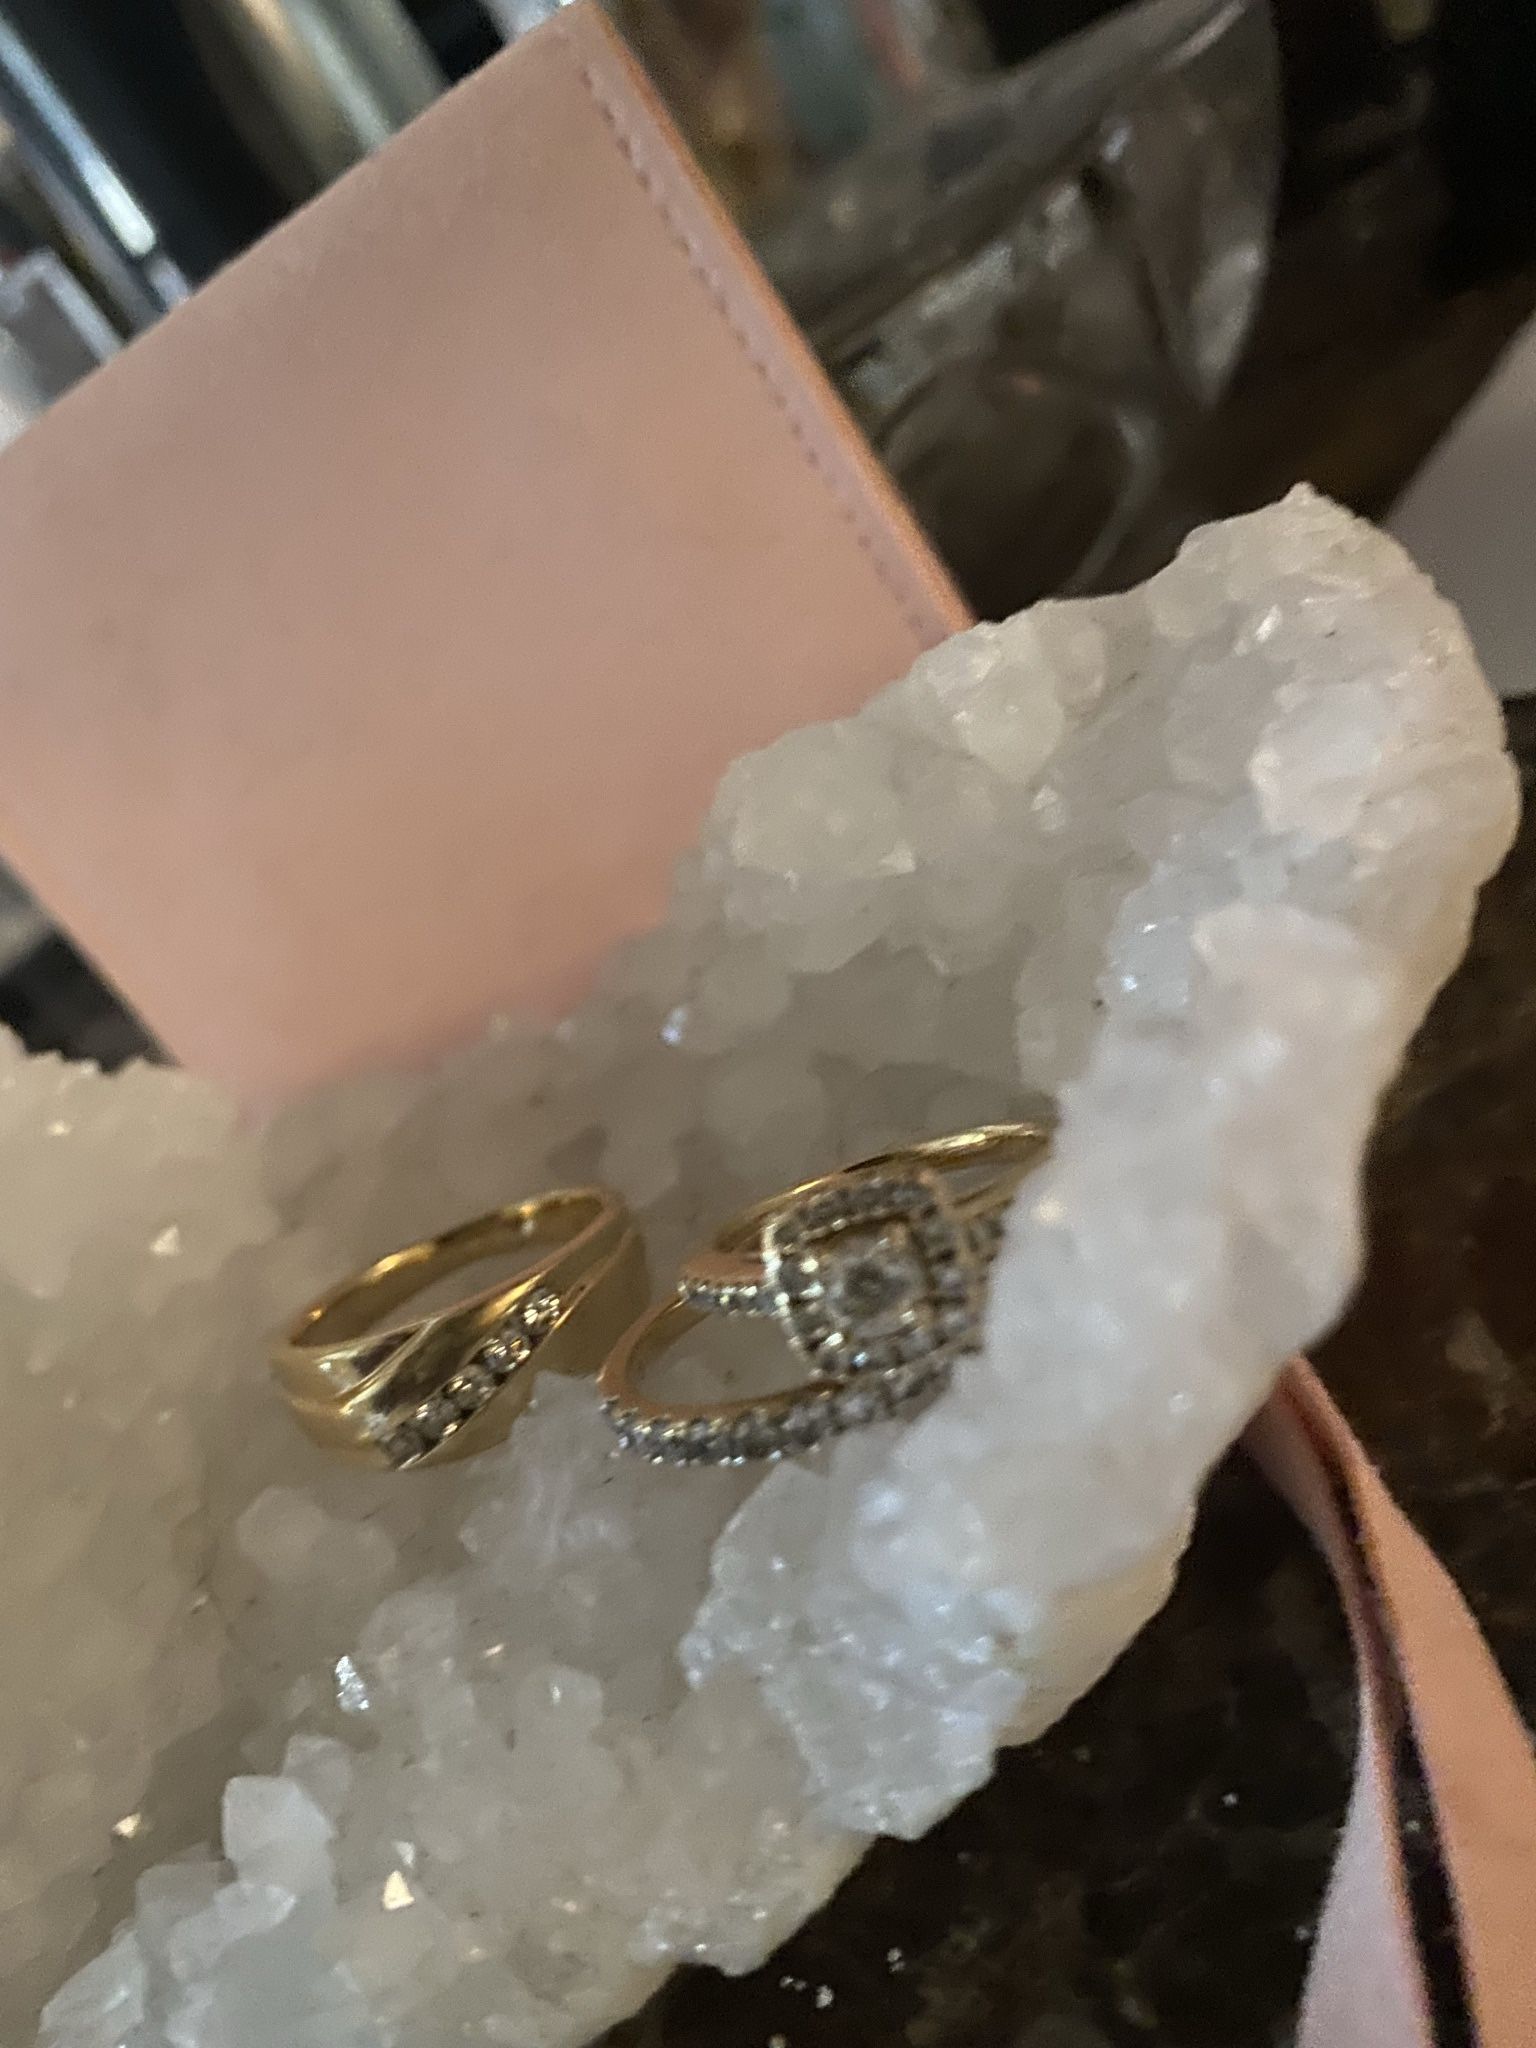 Engagement/Wedding Rings